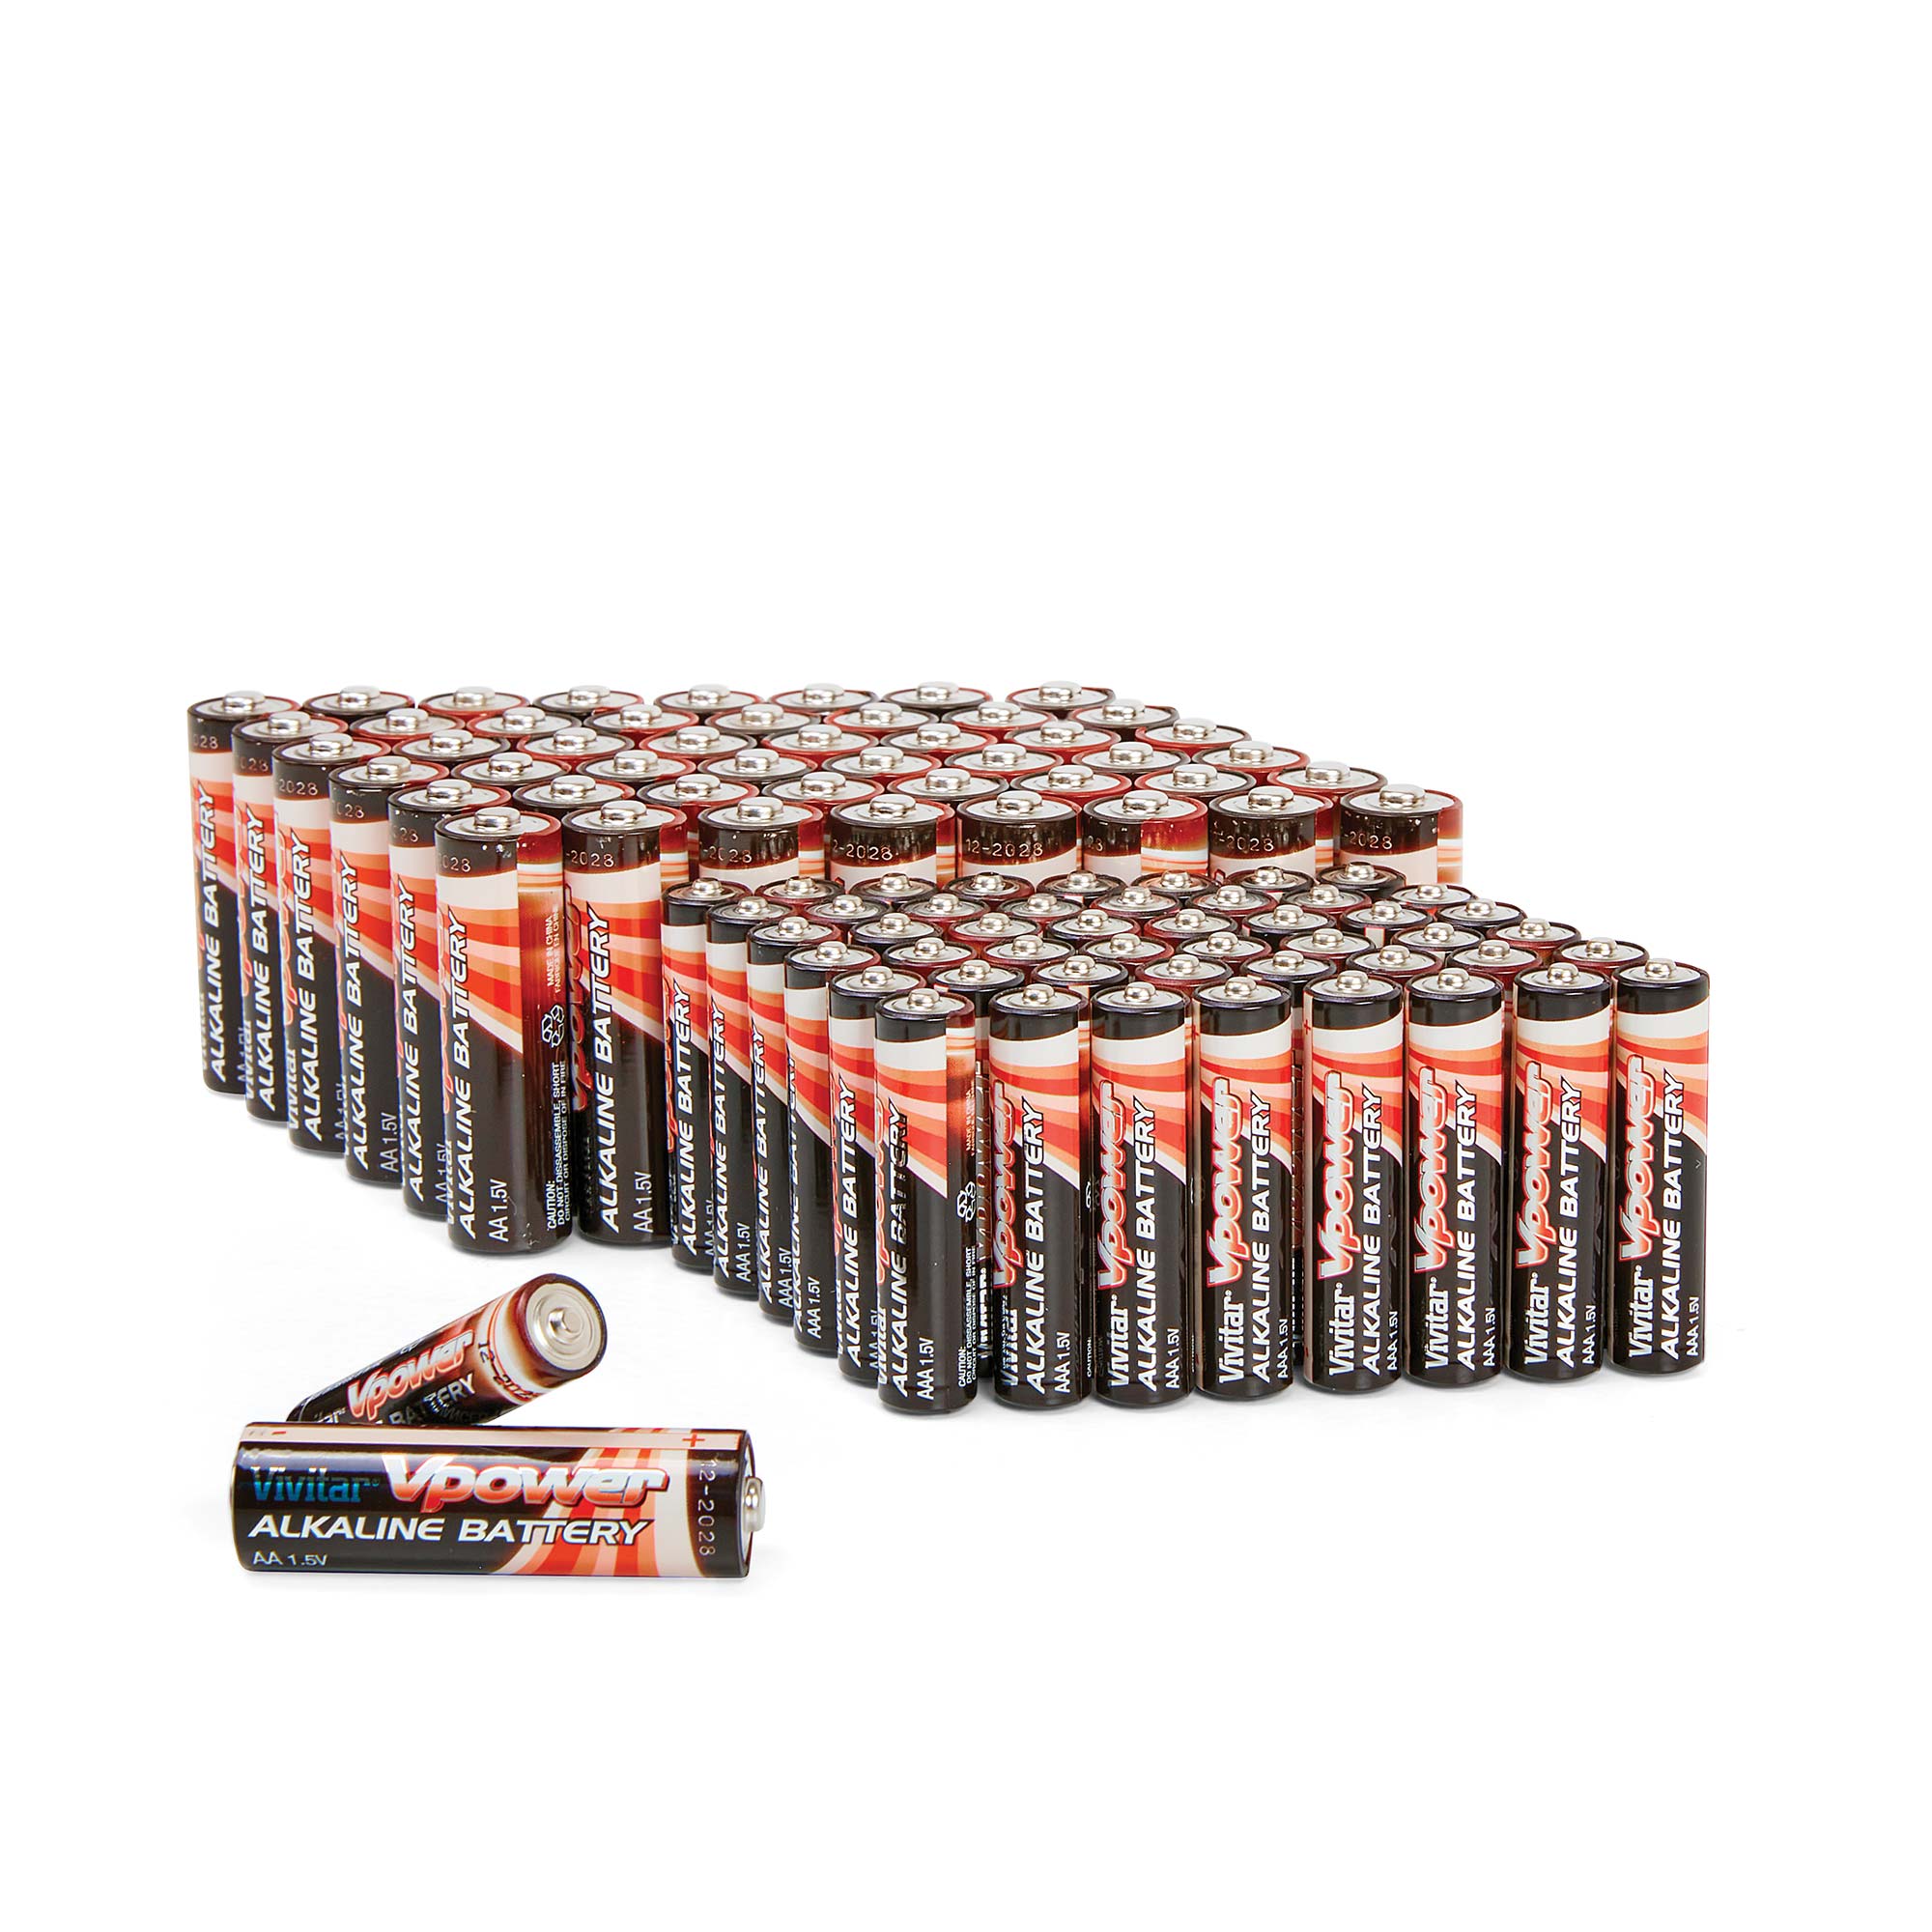 Vivitar AA & AAA Batteries - 96 Pack